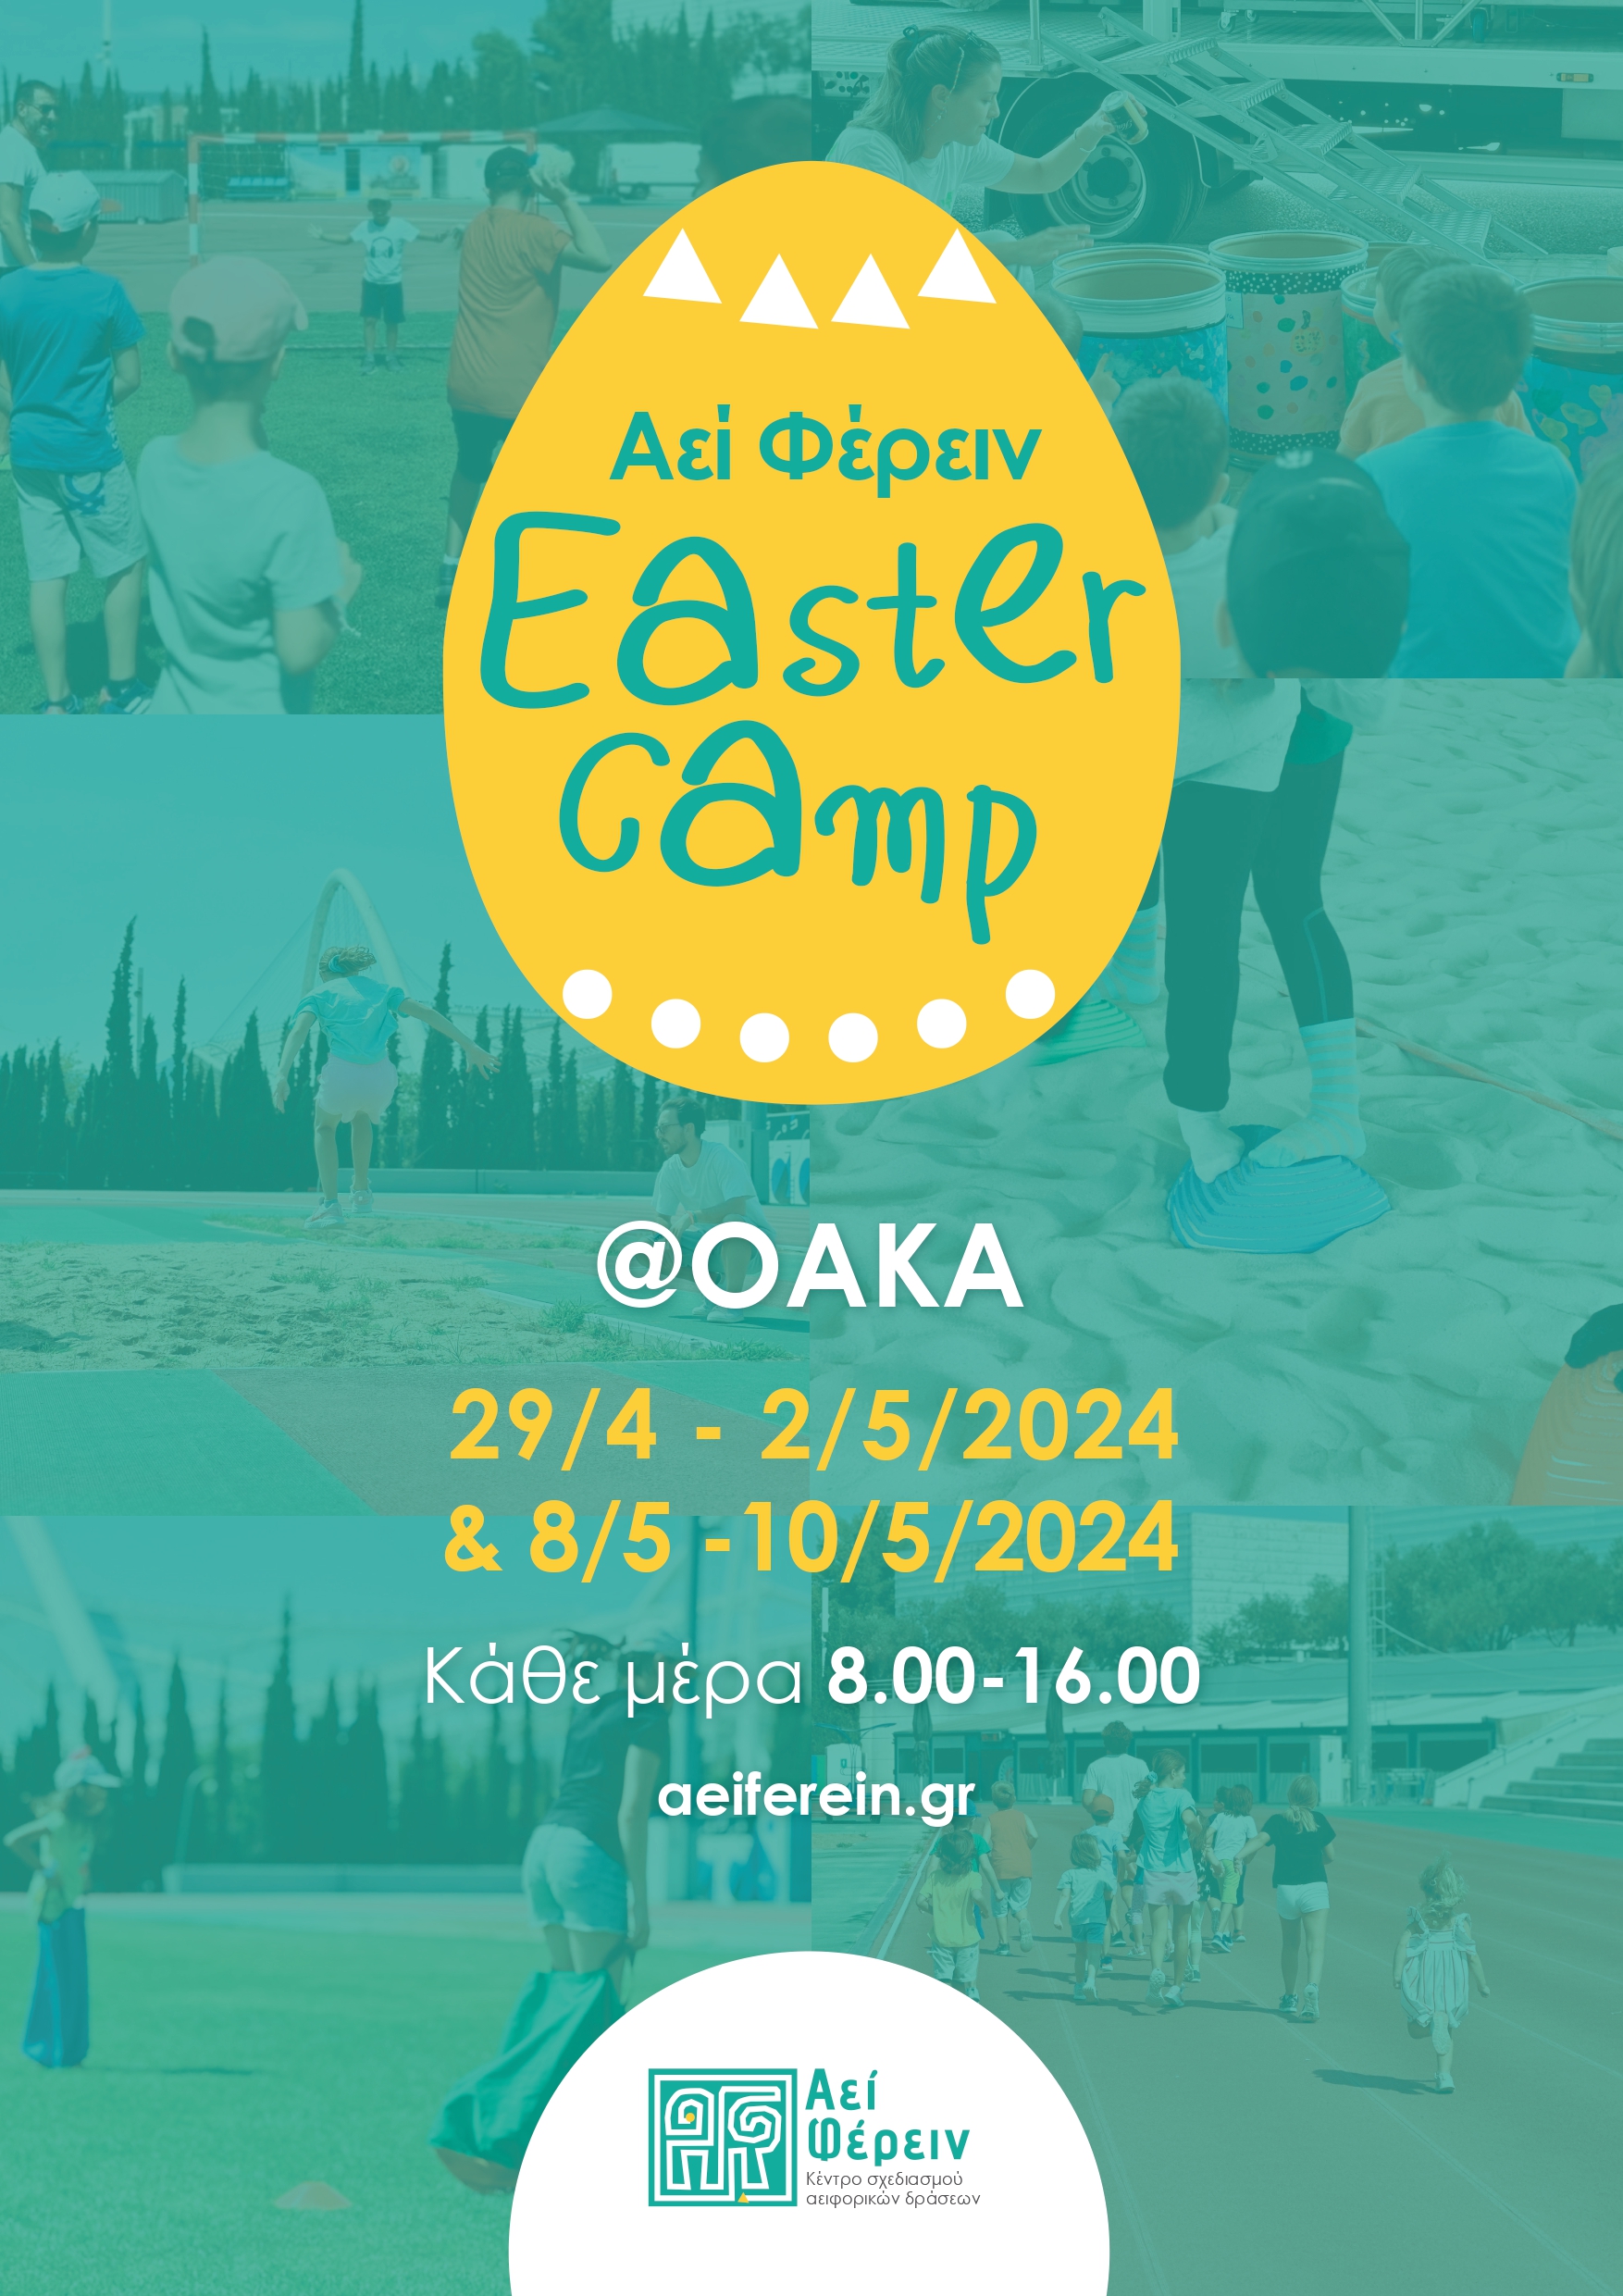 Aei Ferein Easter Camp  @OAKA logo